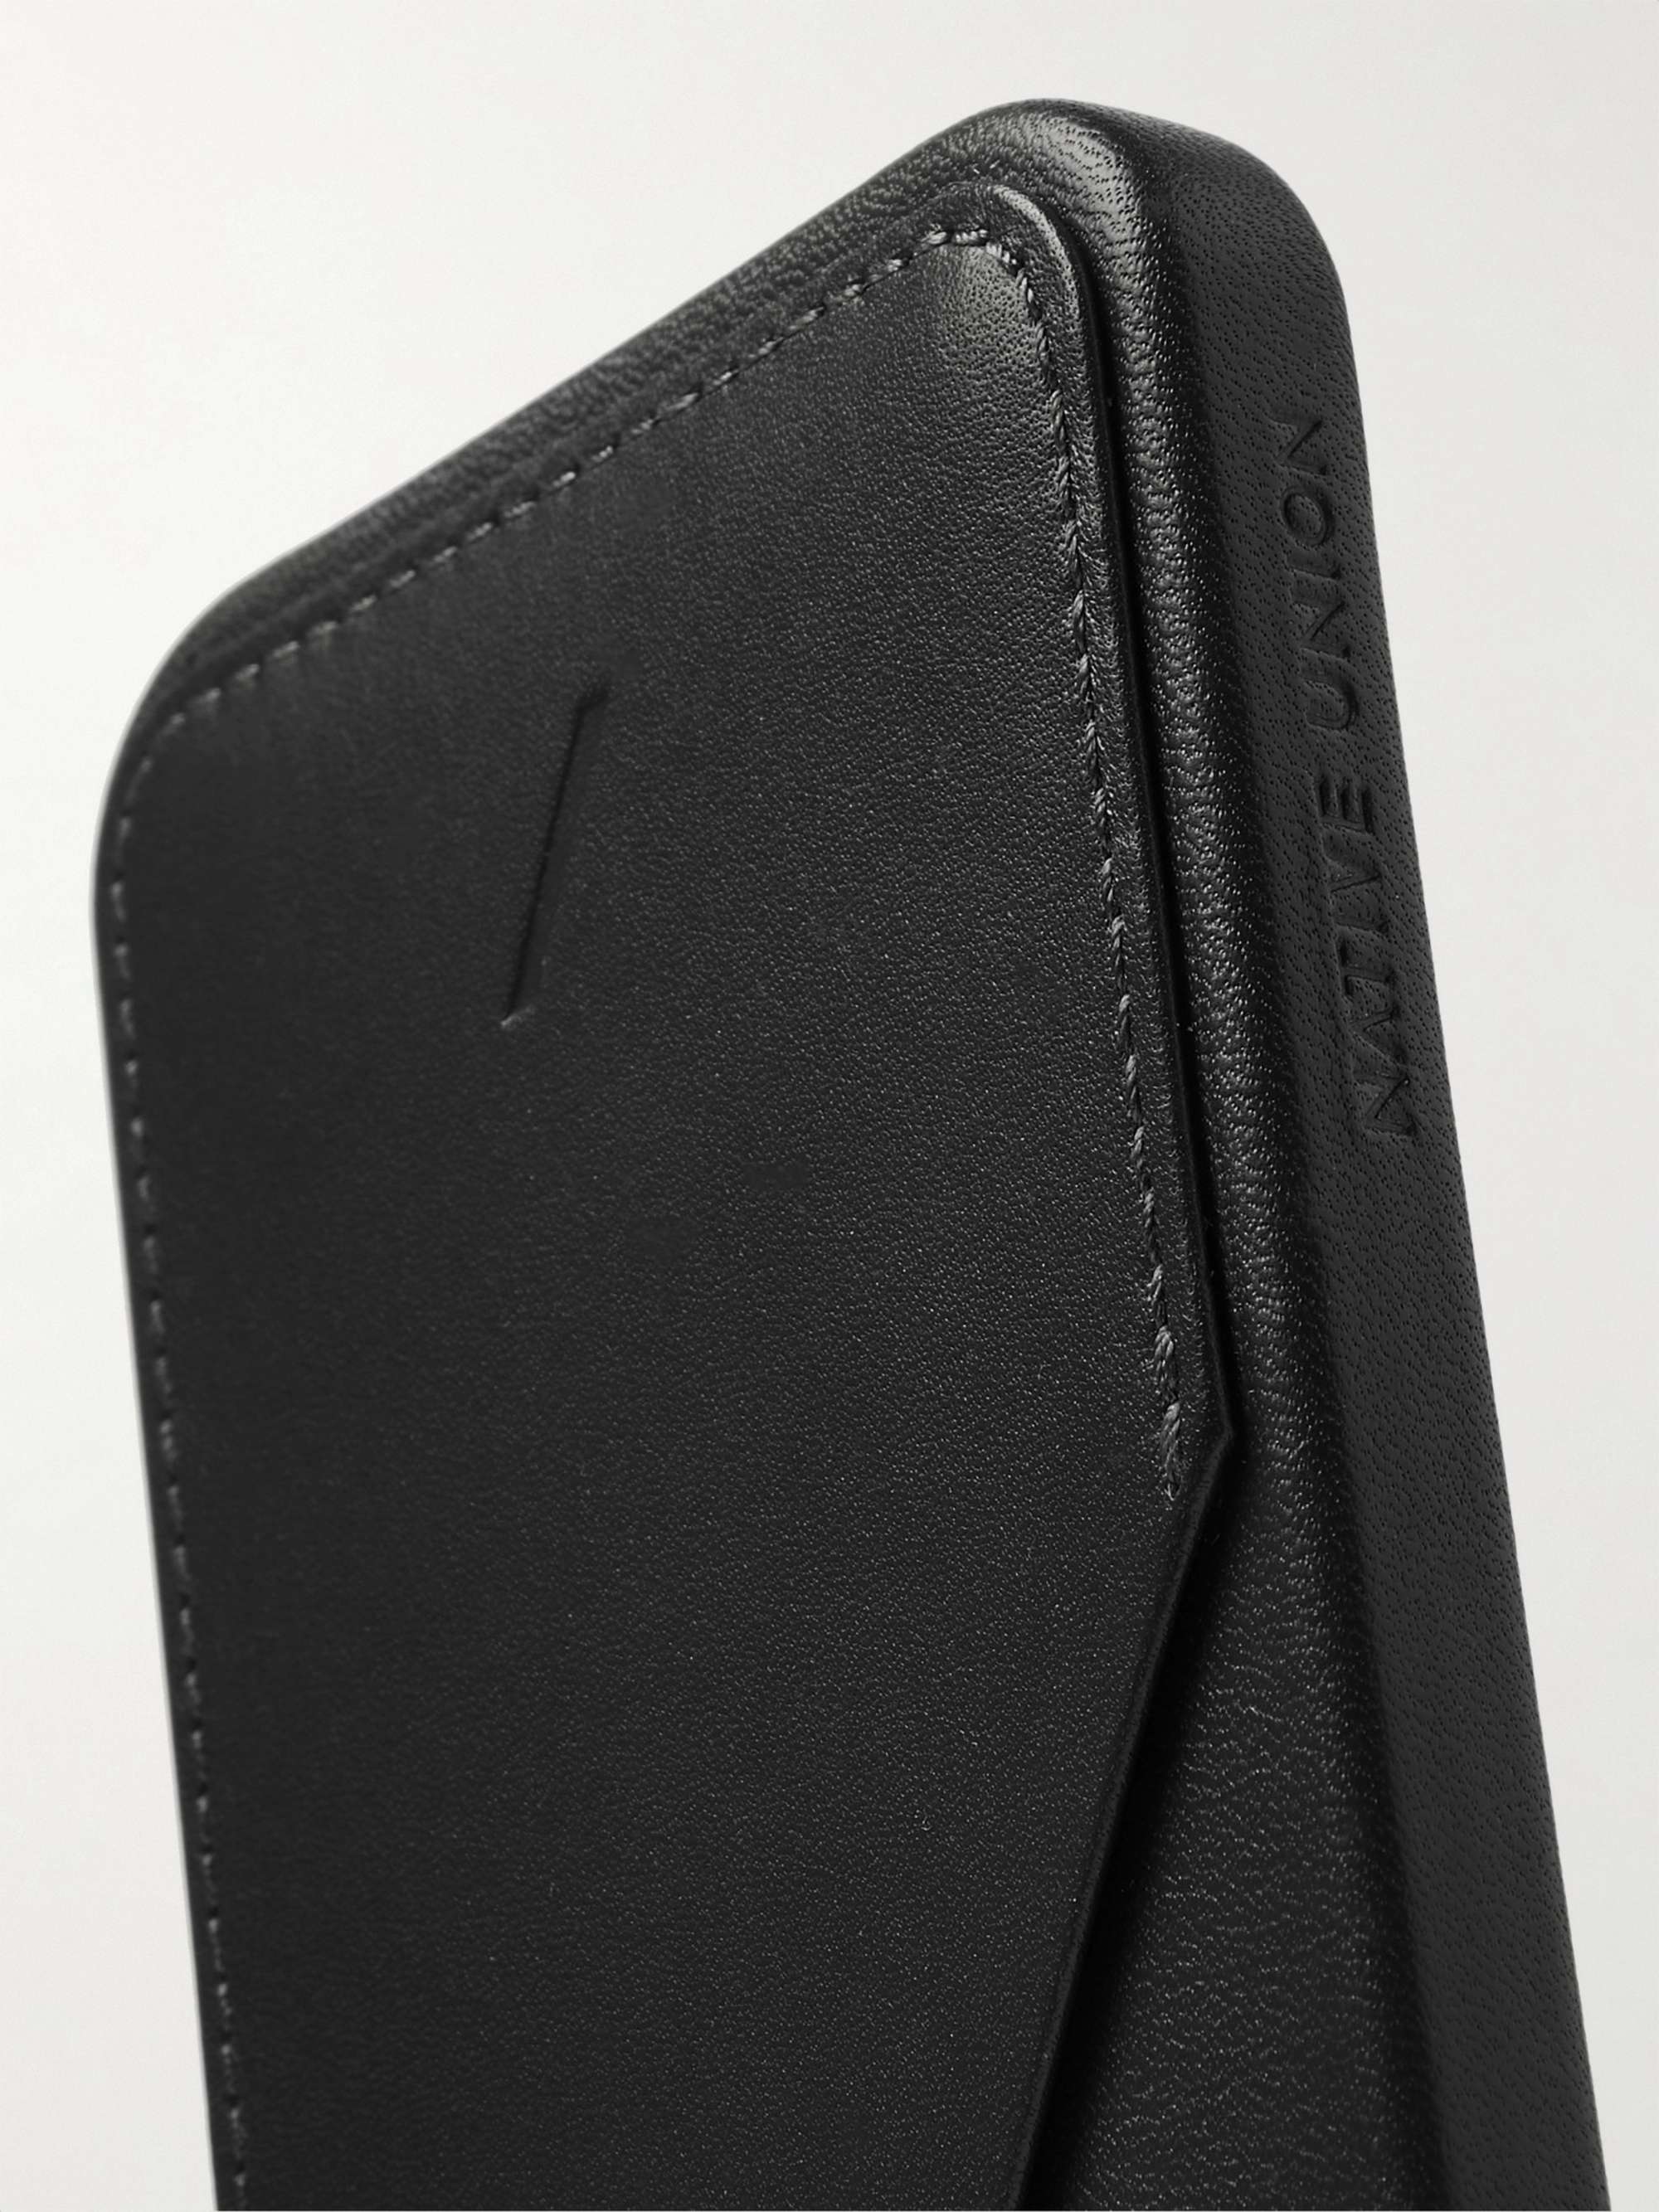 NATIVE UNION Clic Card Leather iPhone 12 Case